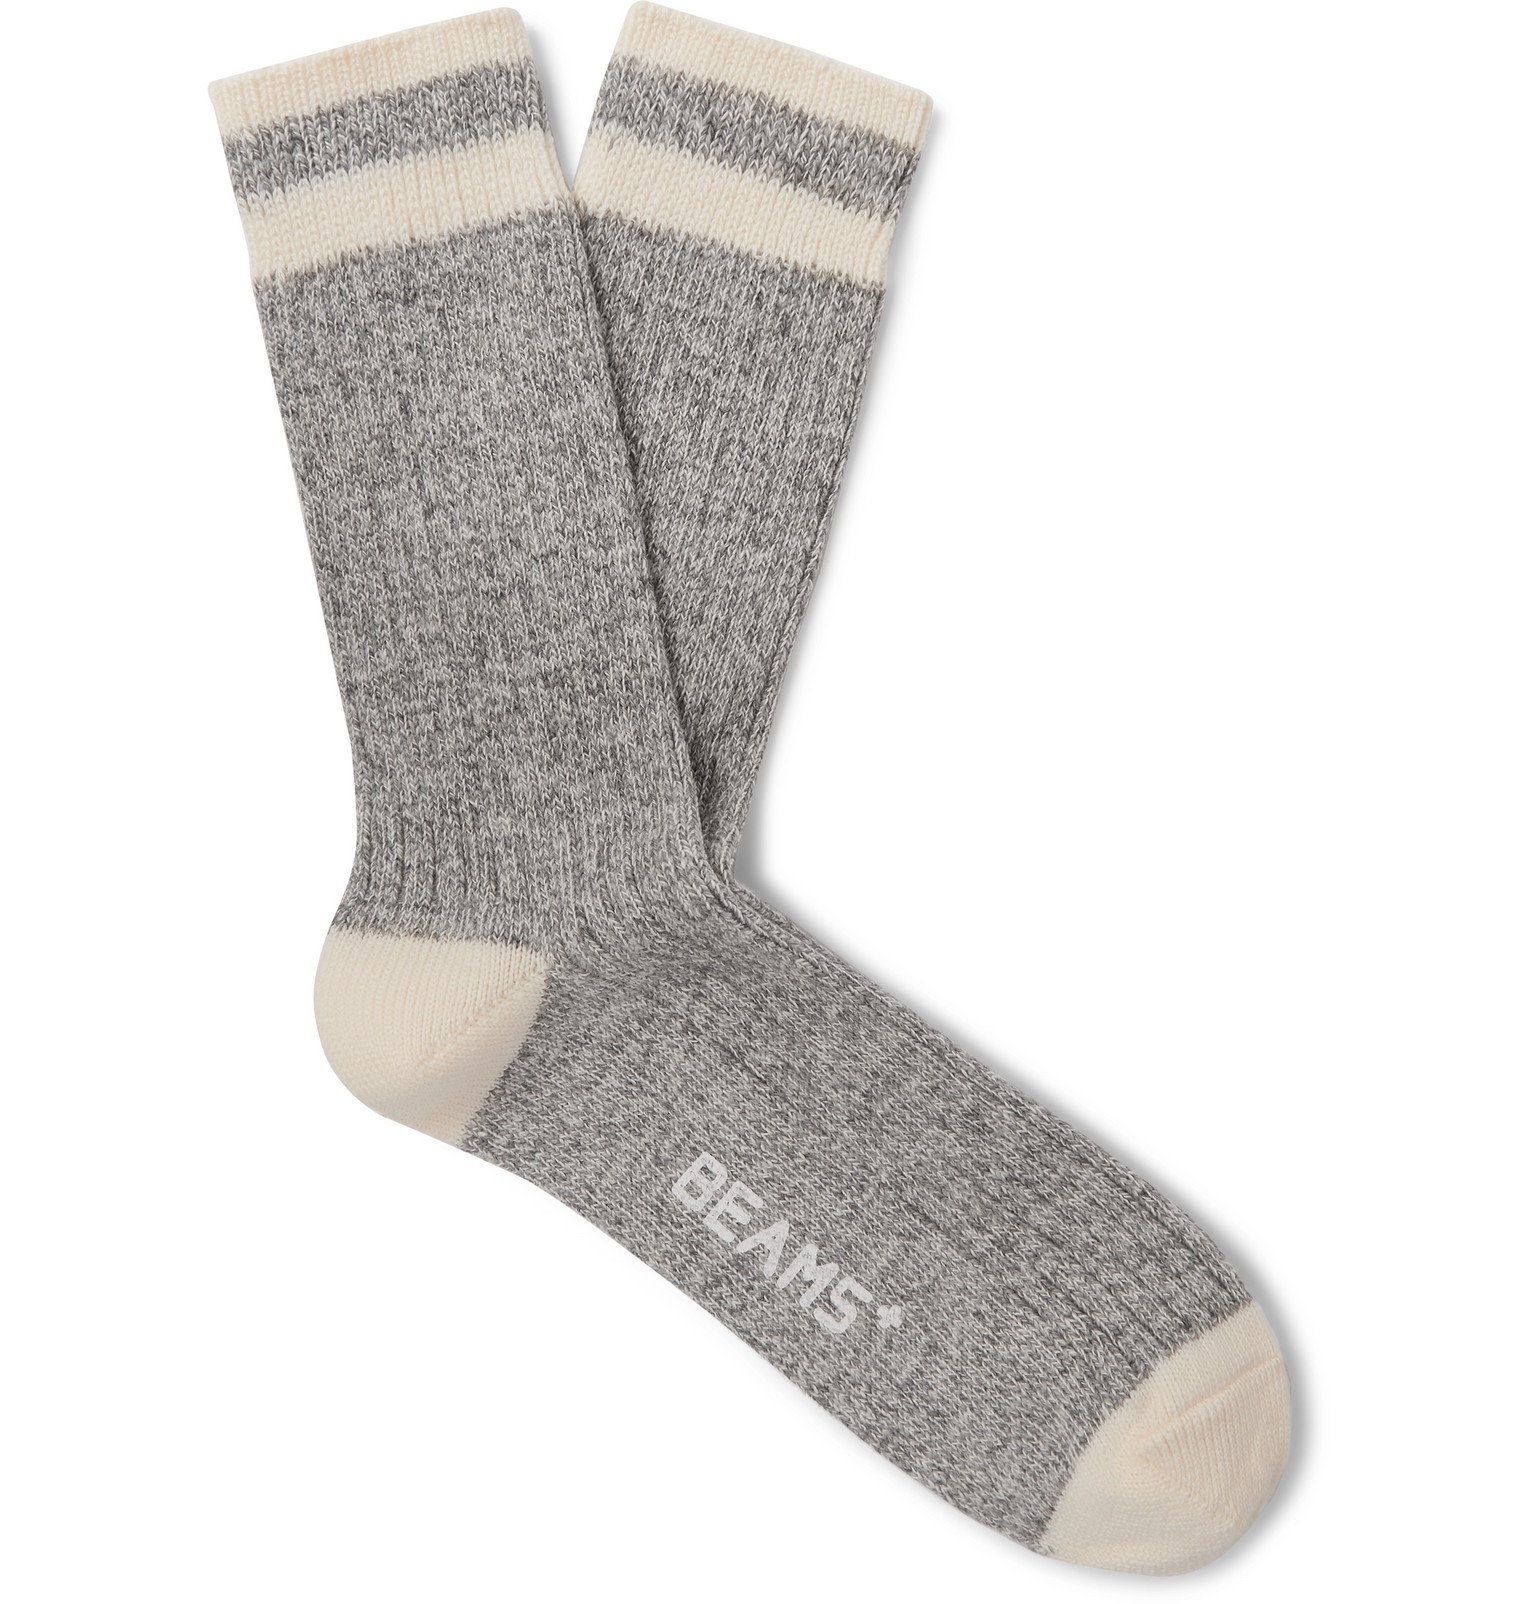 Beams Plus - Ragg Two-Pack Striped Mélange Cotton Socks - Gray Beams Plus